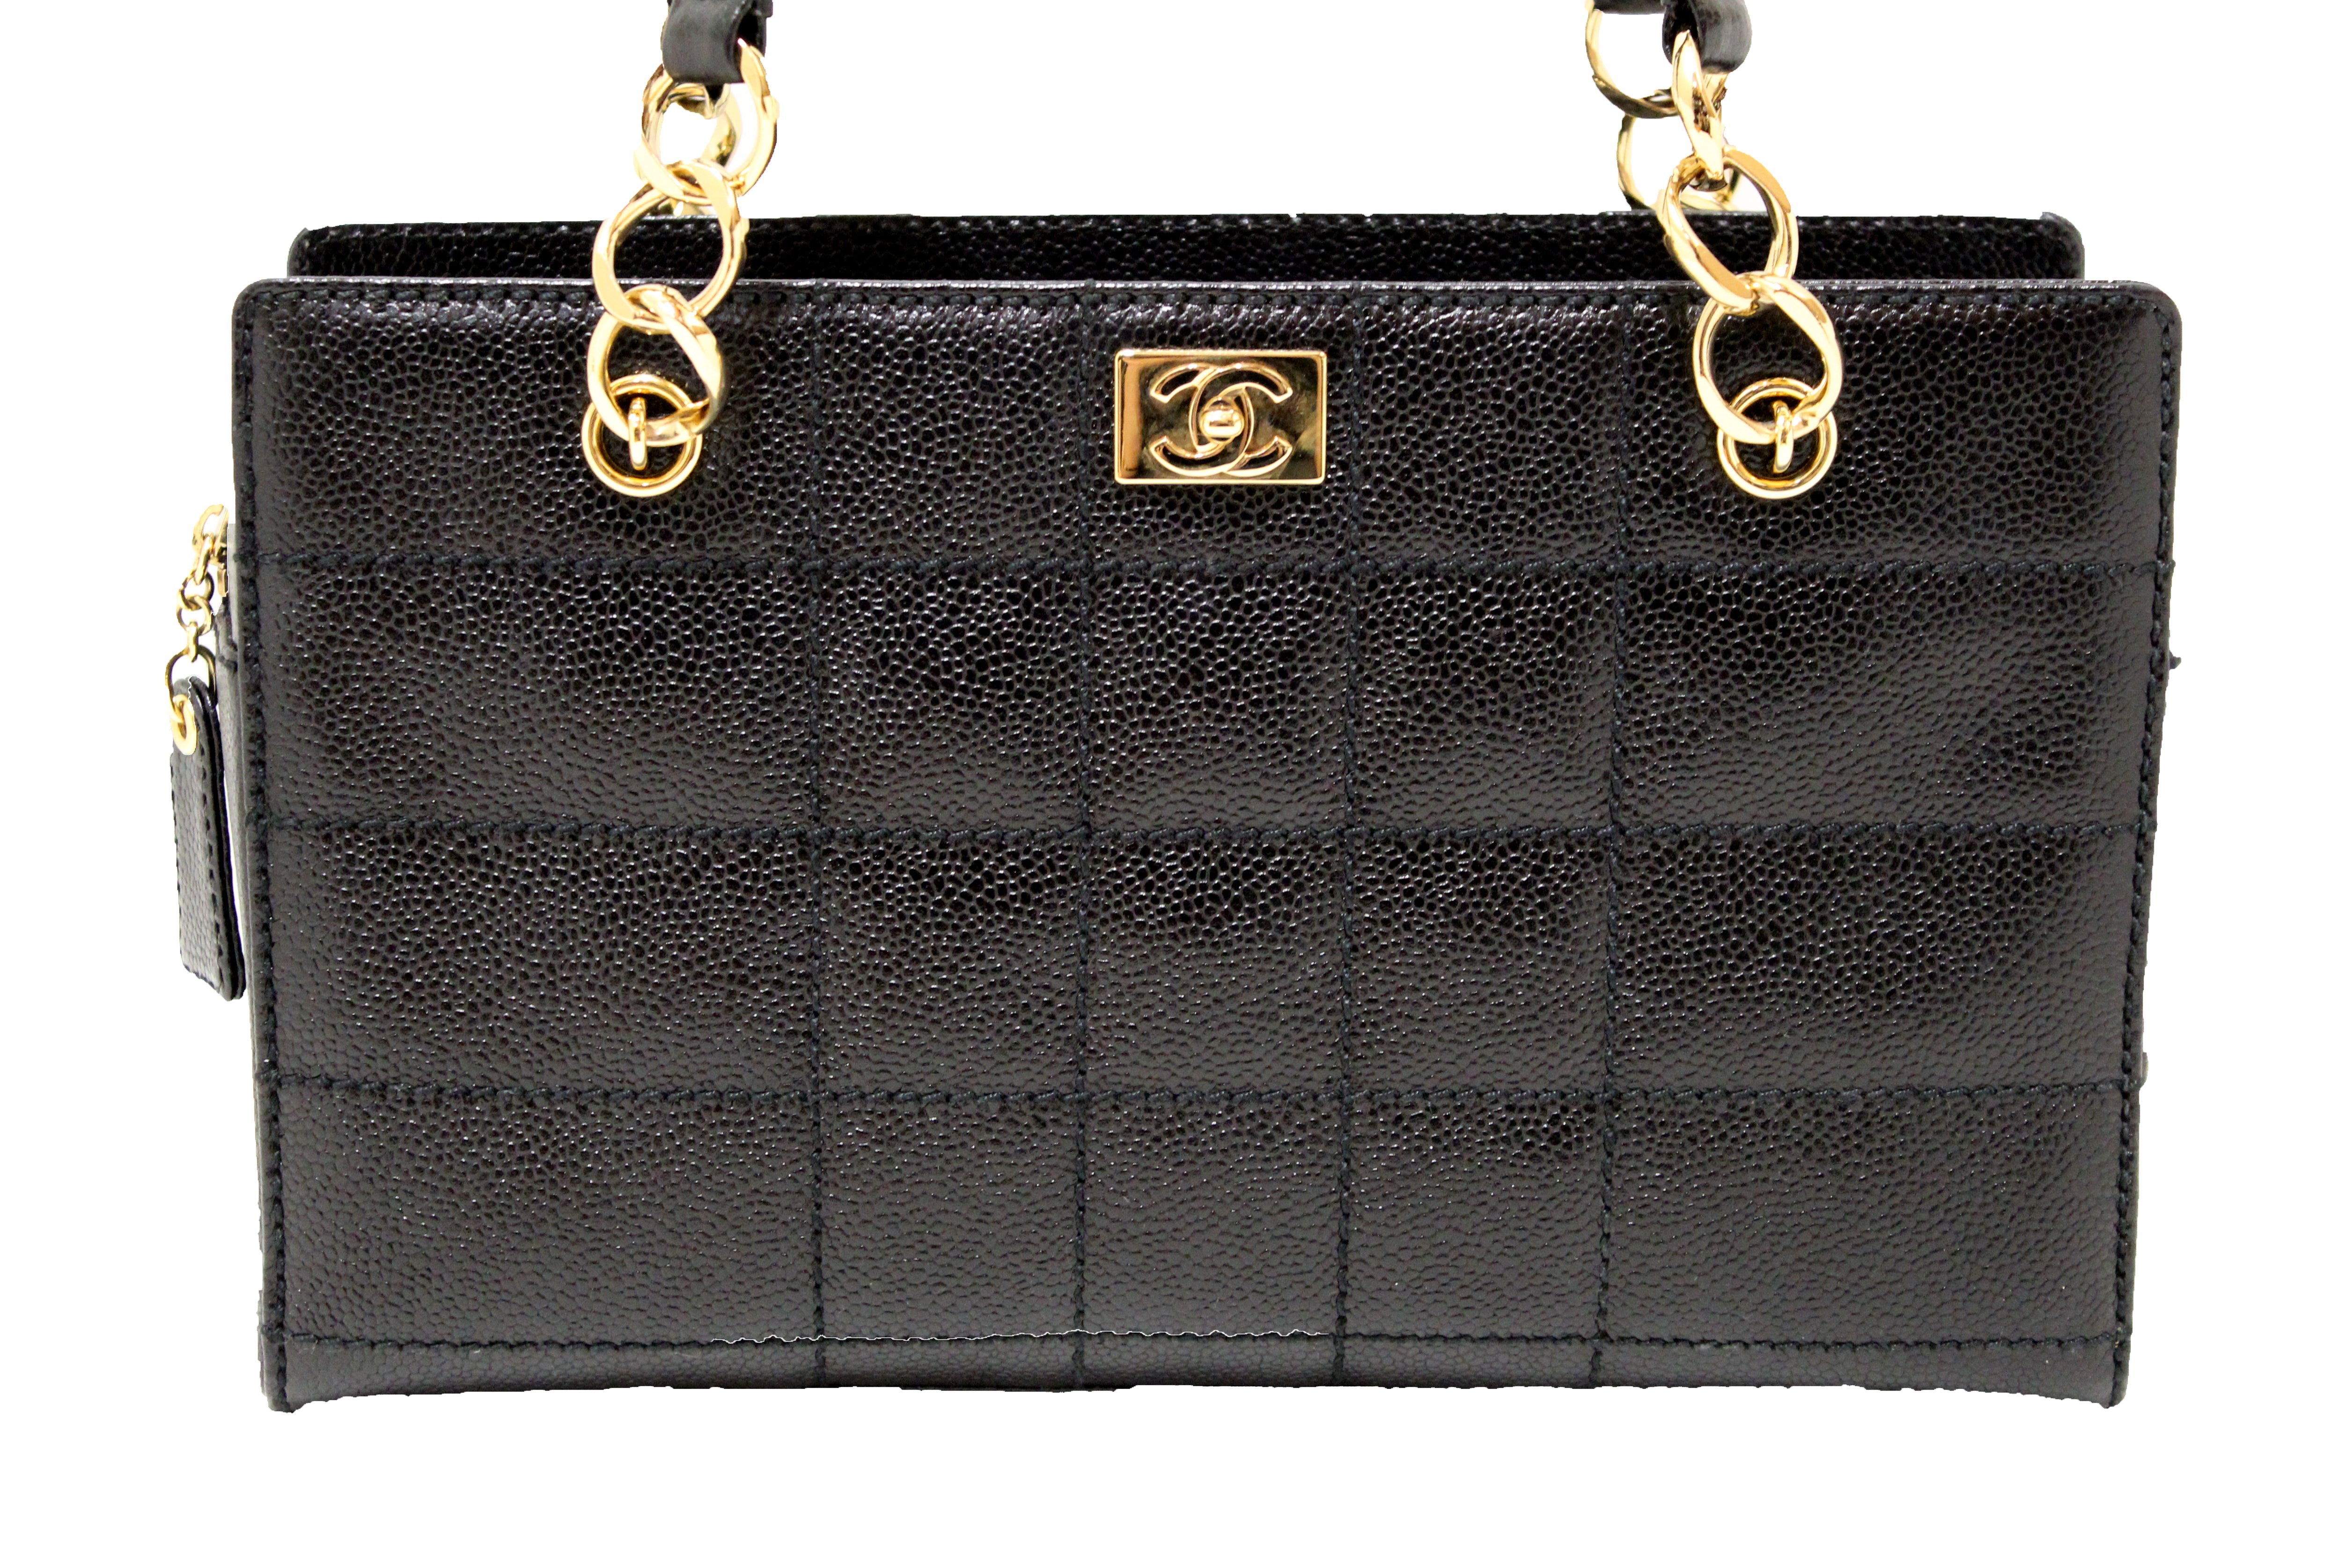 Authentic Chanel Black Square Stitch Caviar Leather Shoulder Tote Bag